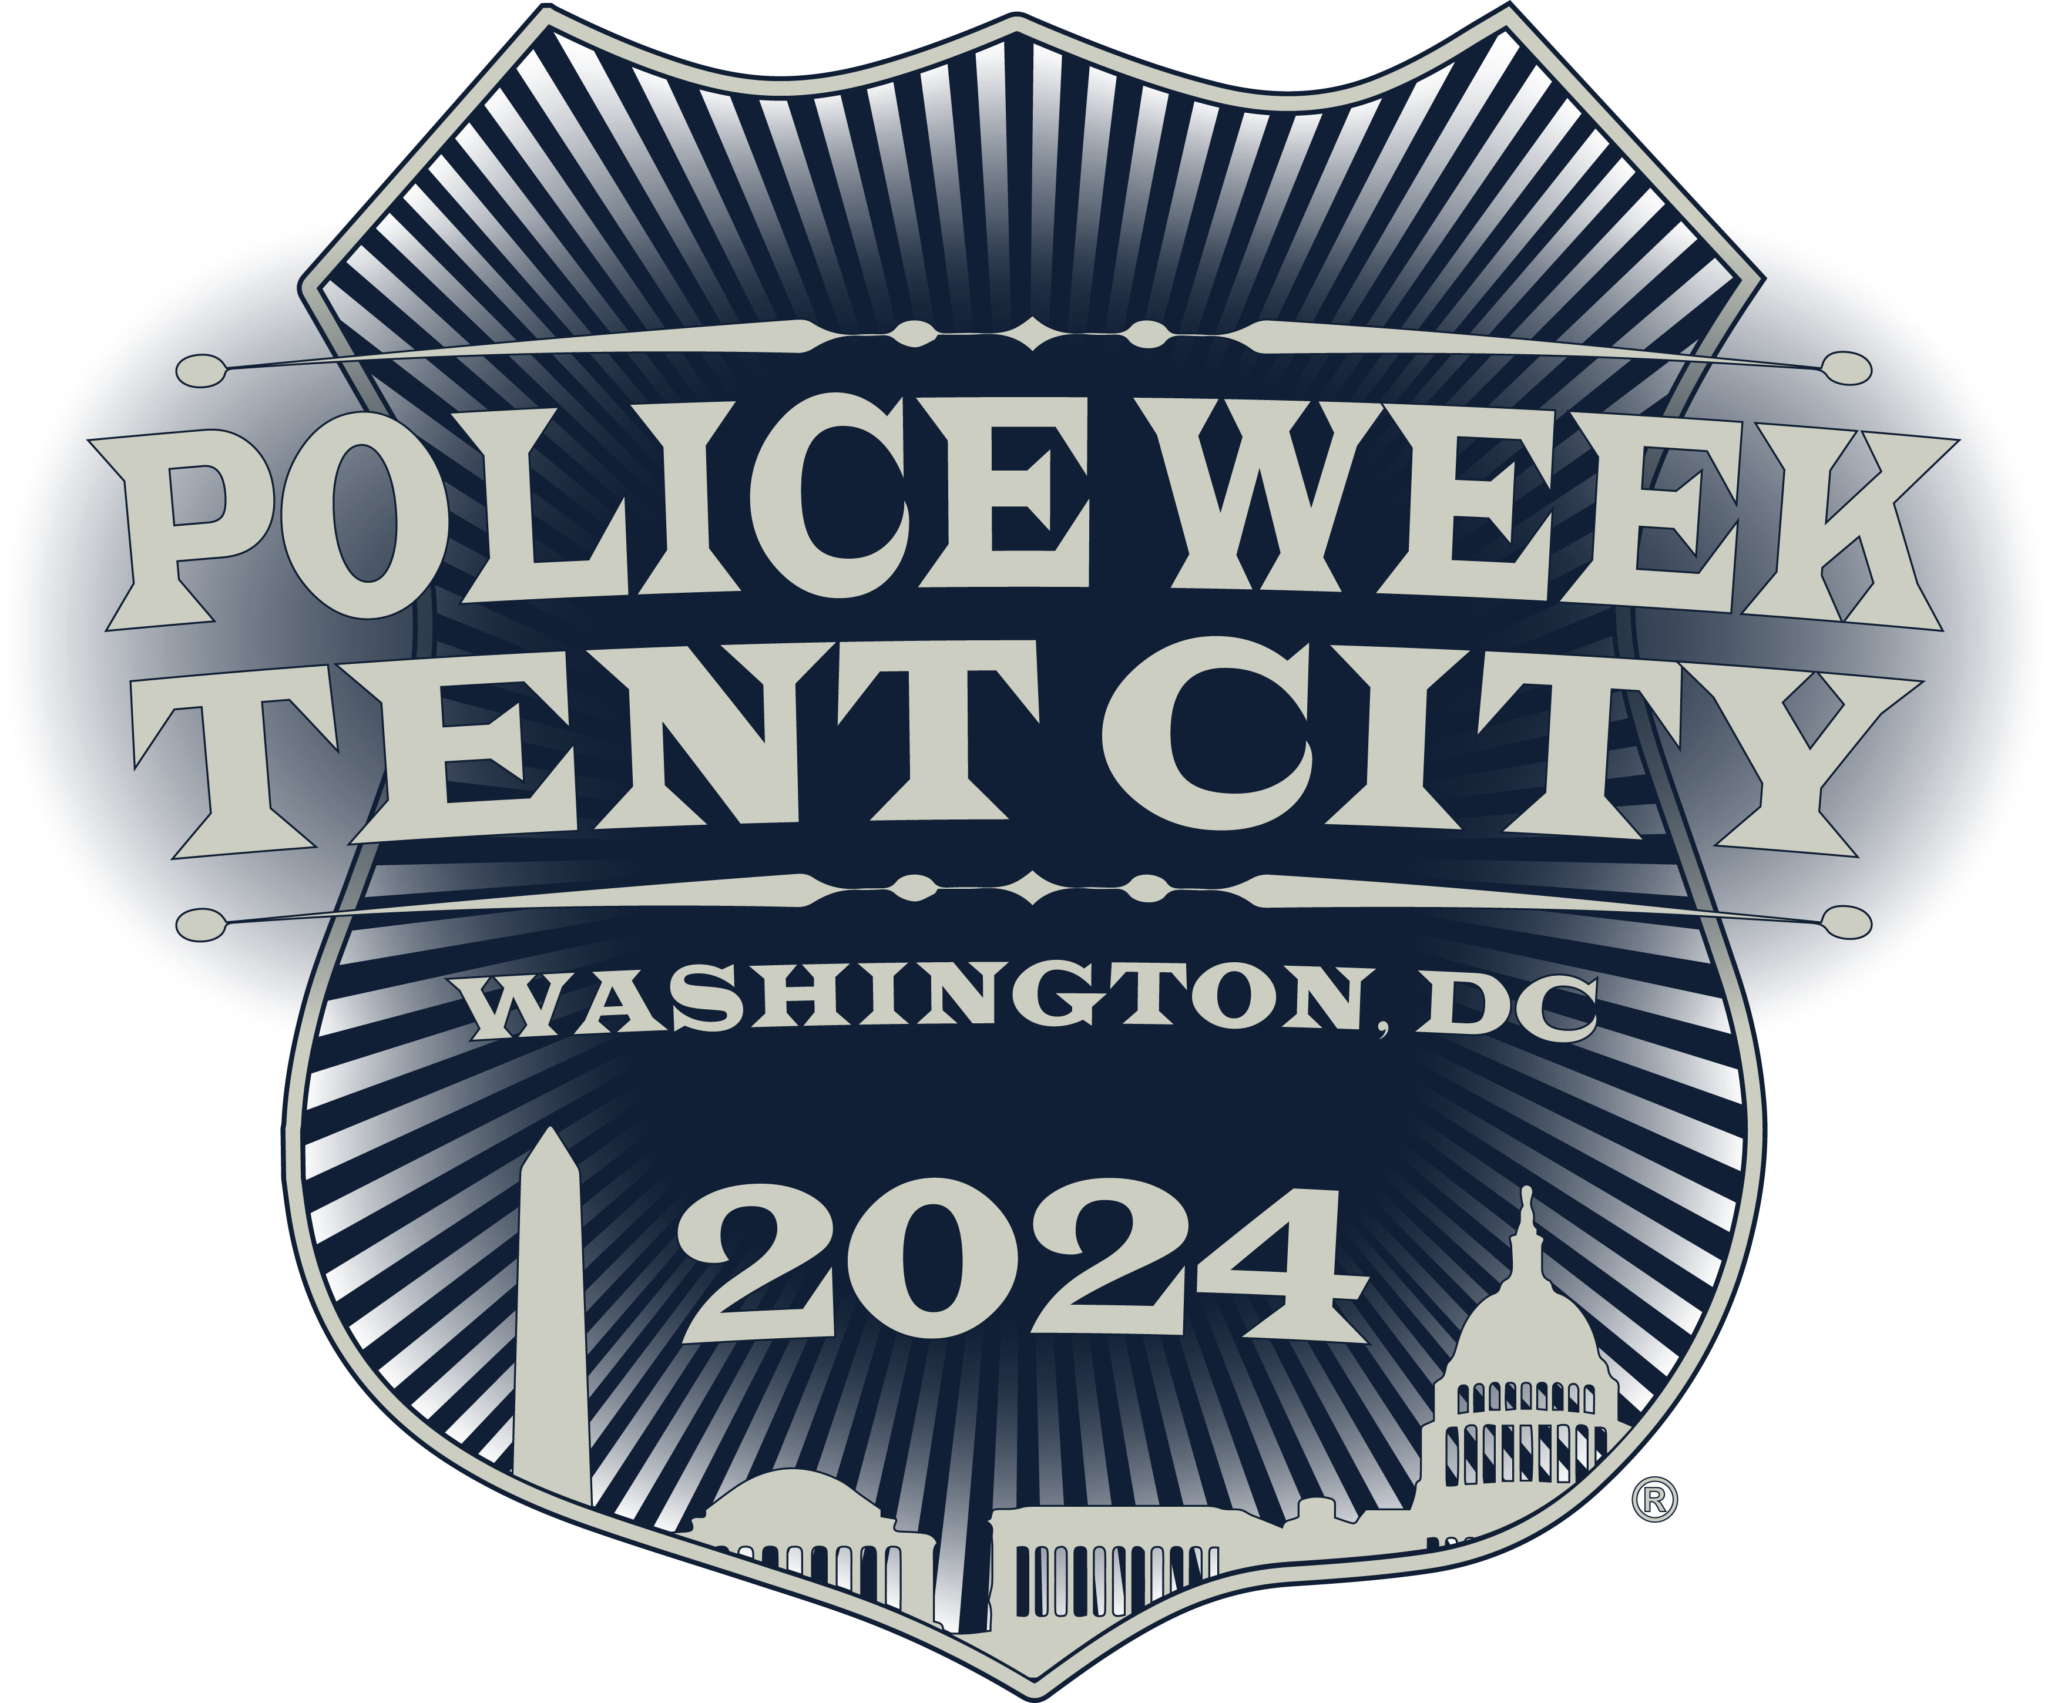 FAQ Police Week Tent City